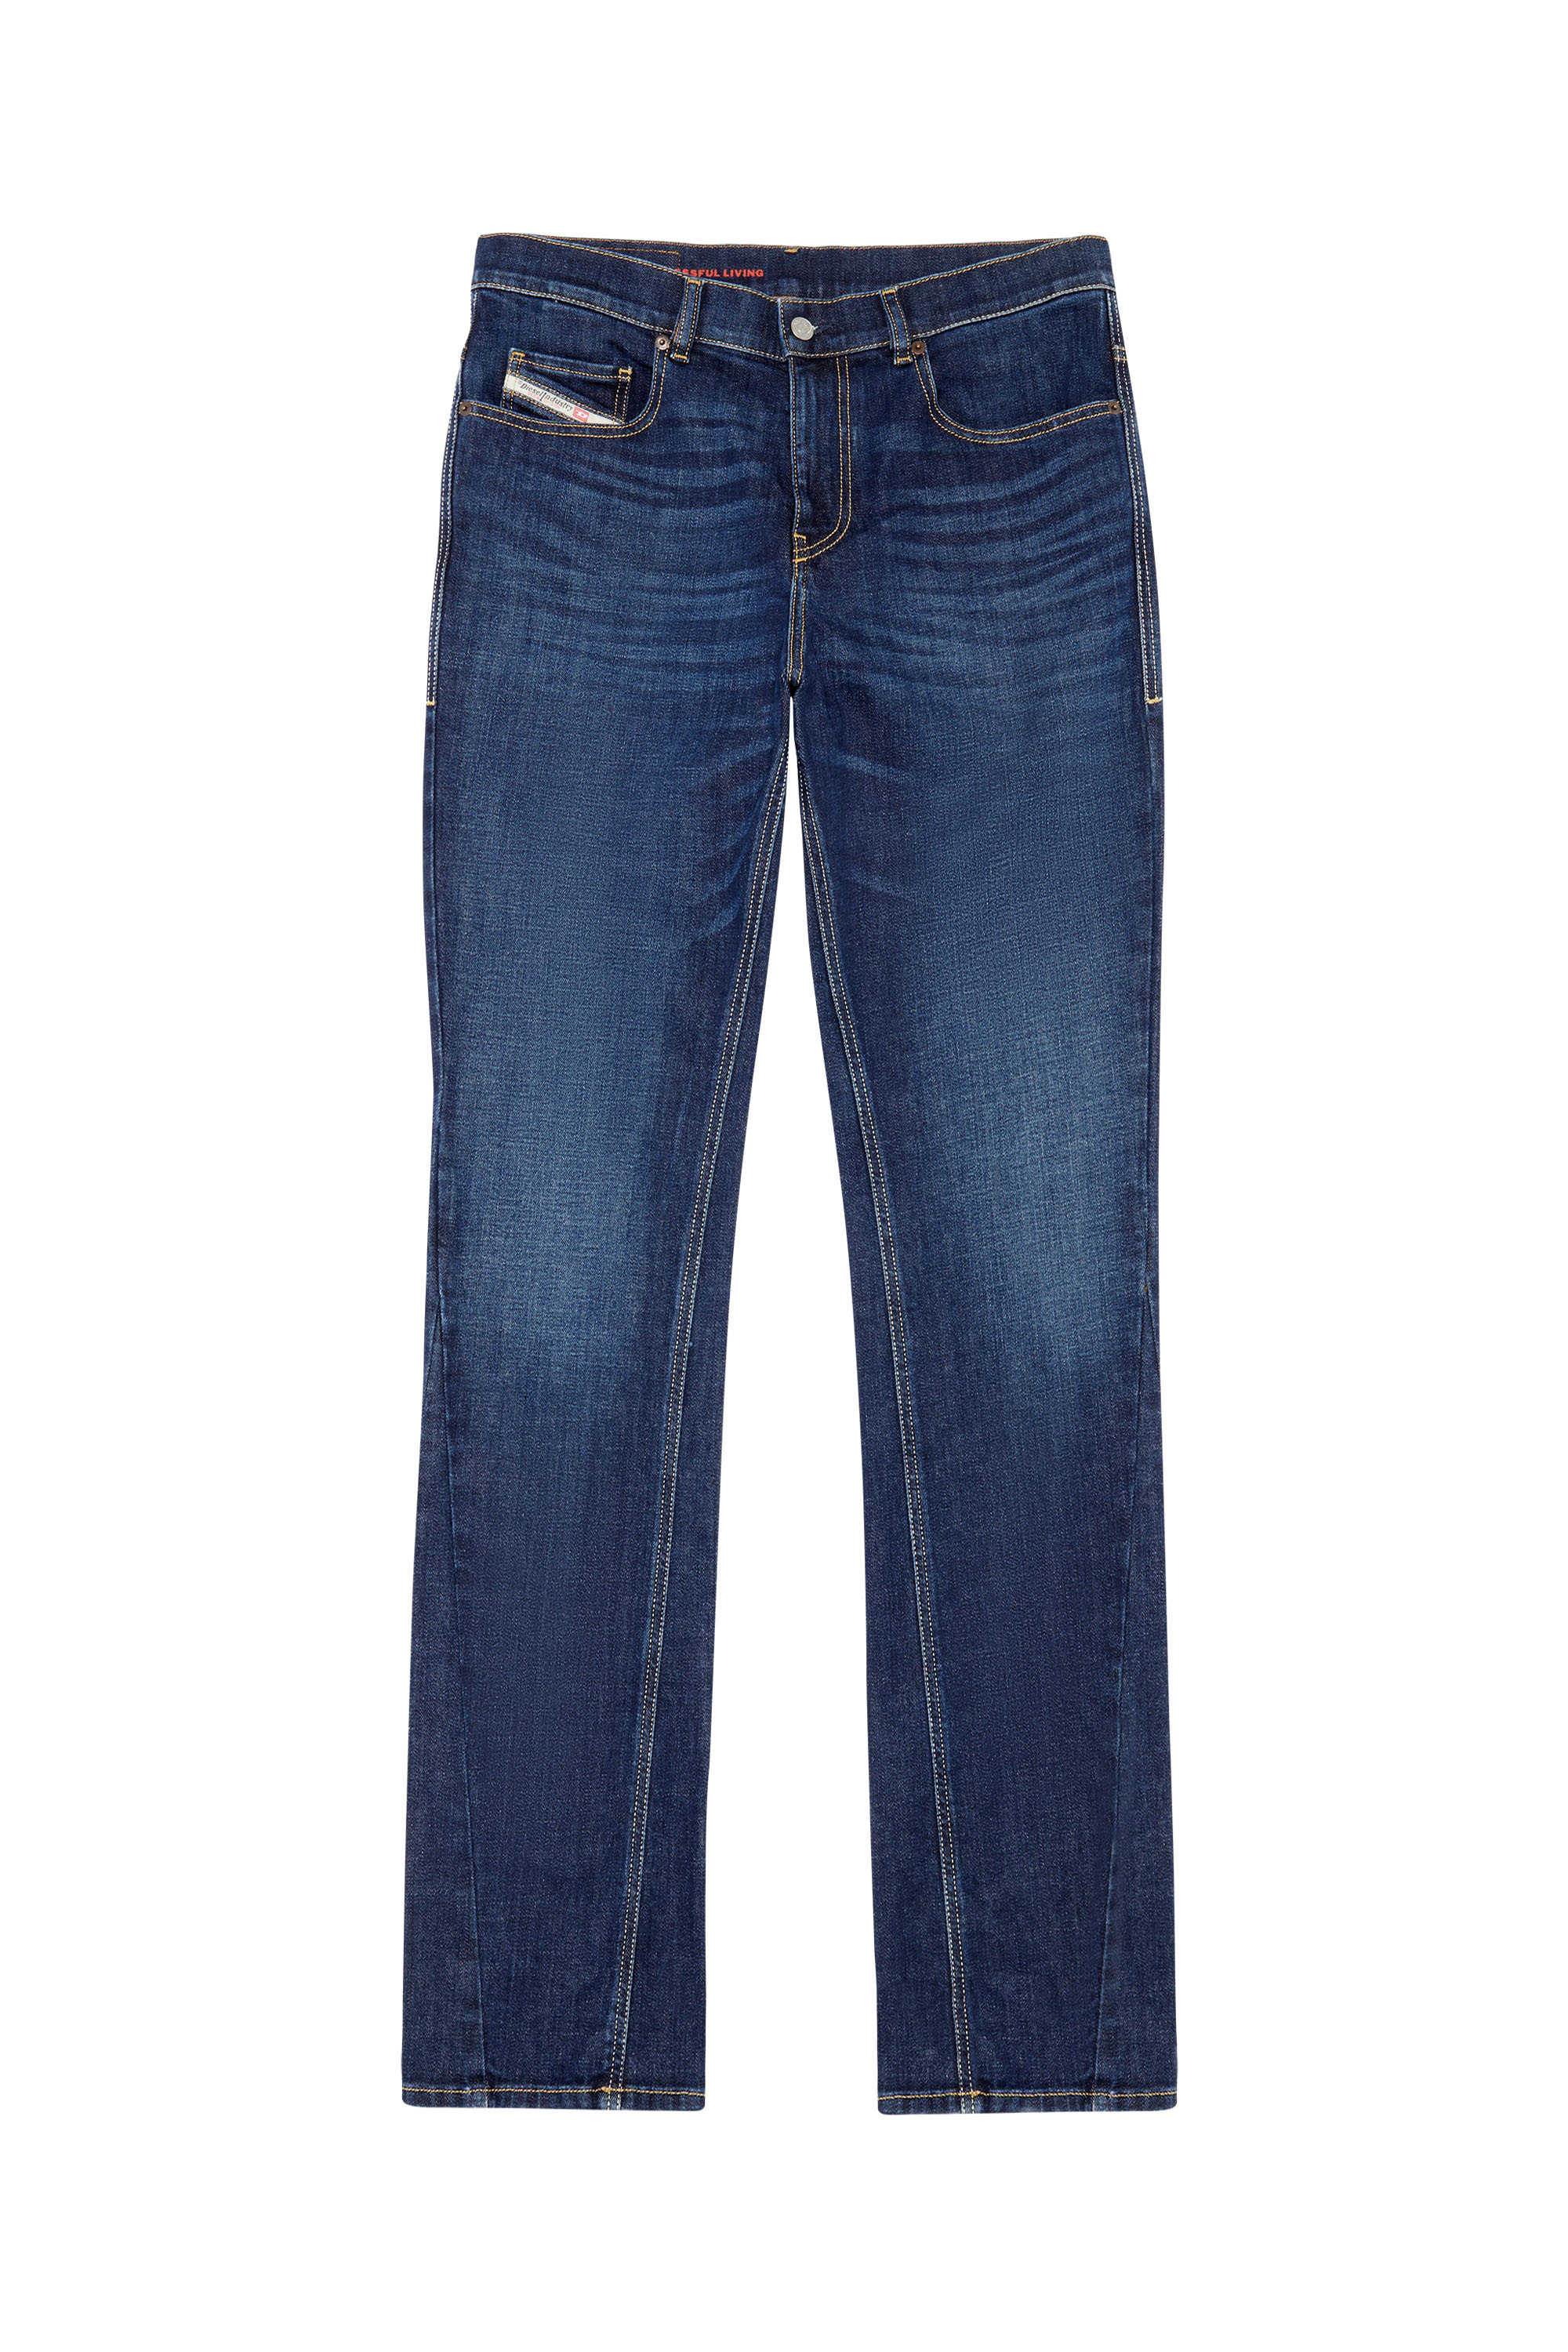 2021 09B90 Bootcut Jeans, Dark Blue - Jeans